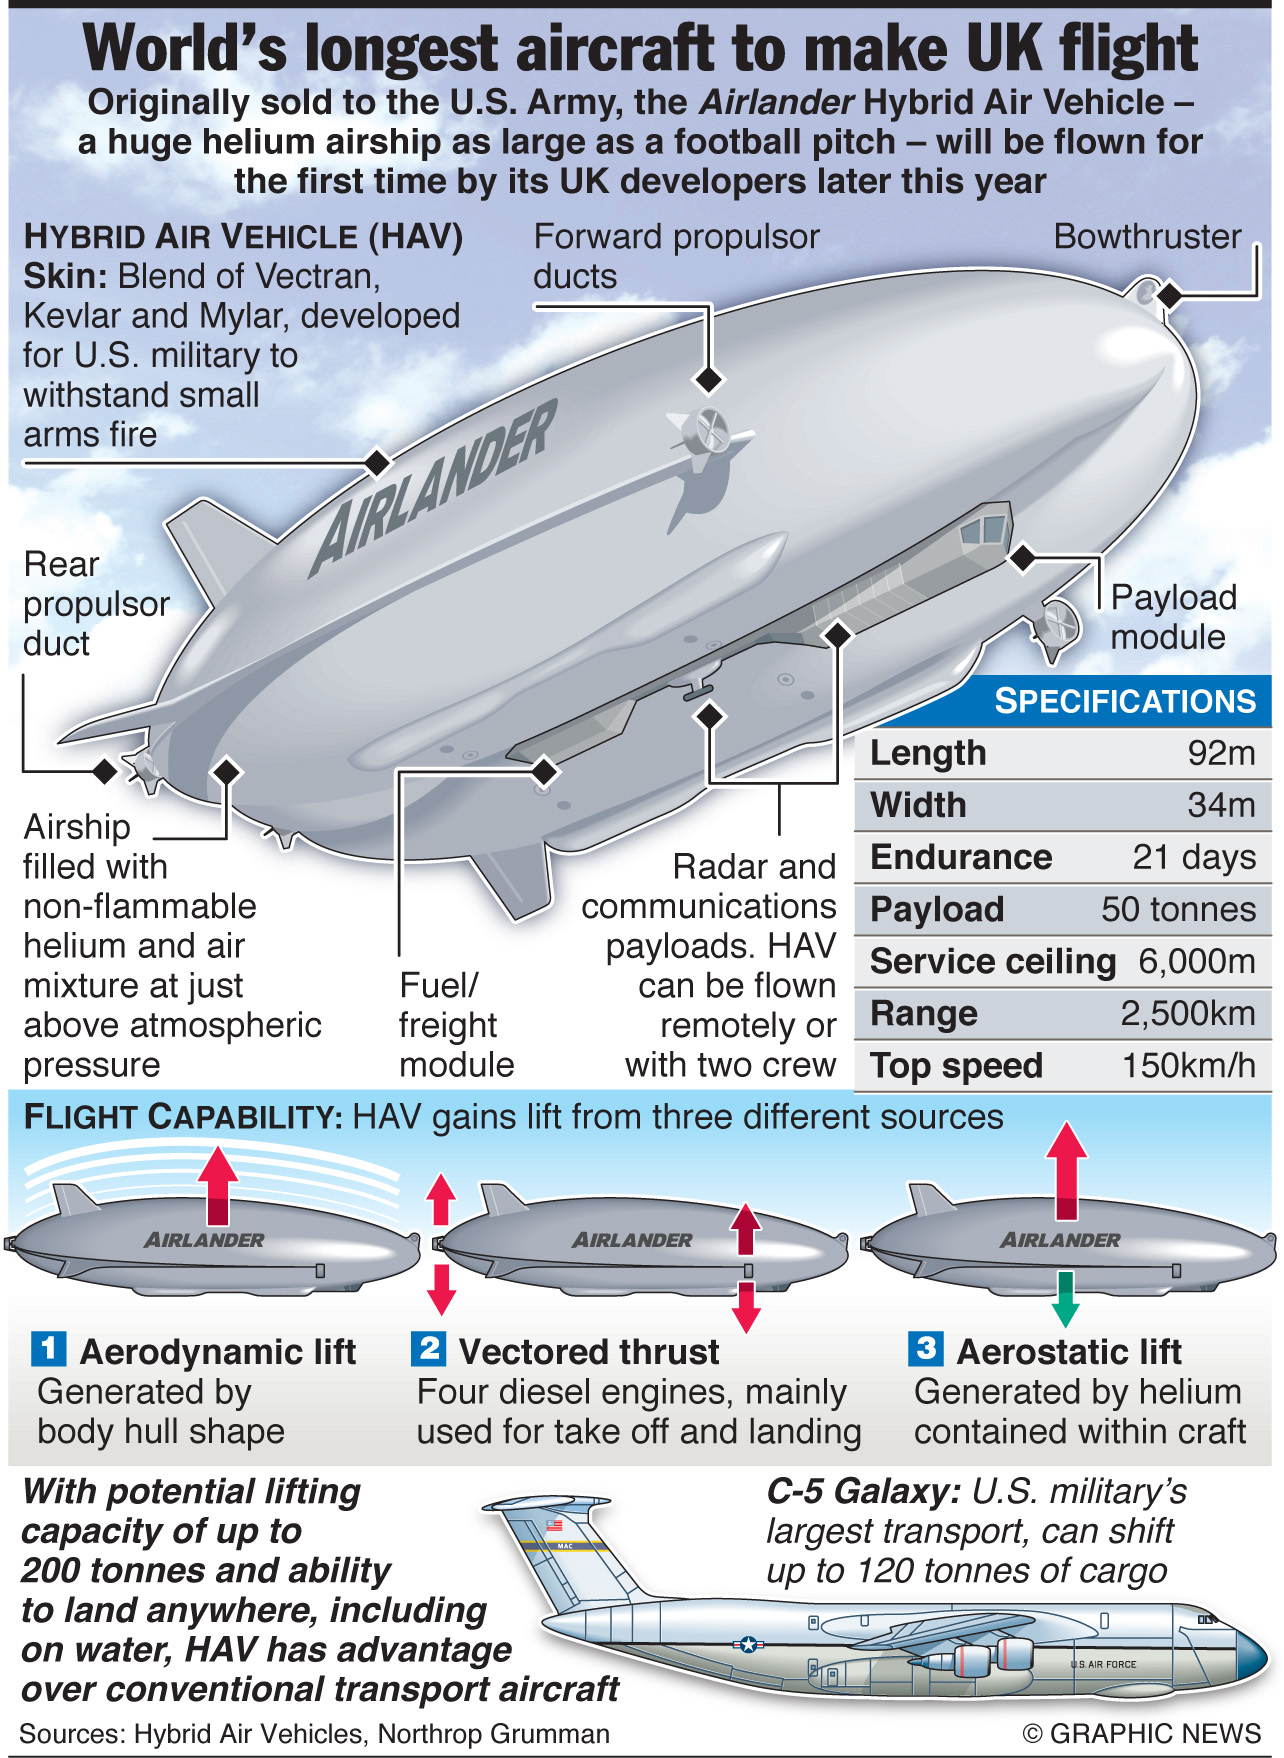 https://engtechmag.files.wordpress.com/2014/03/giant-airship.jpg